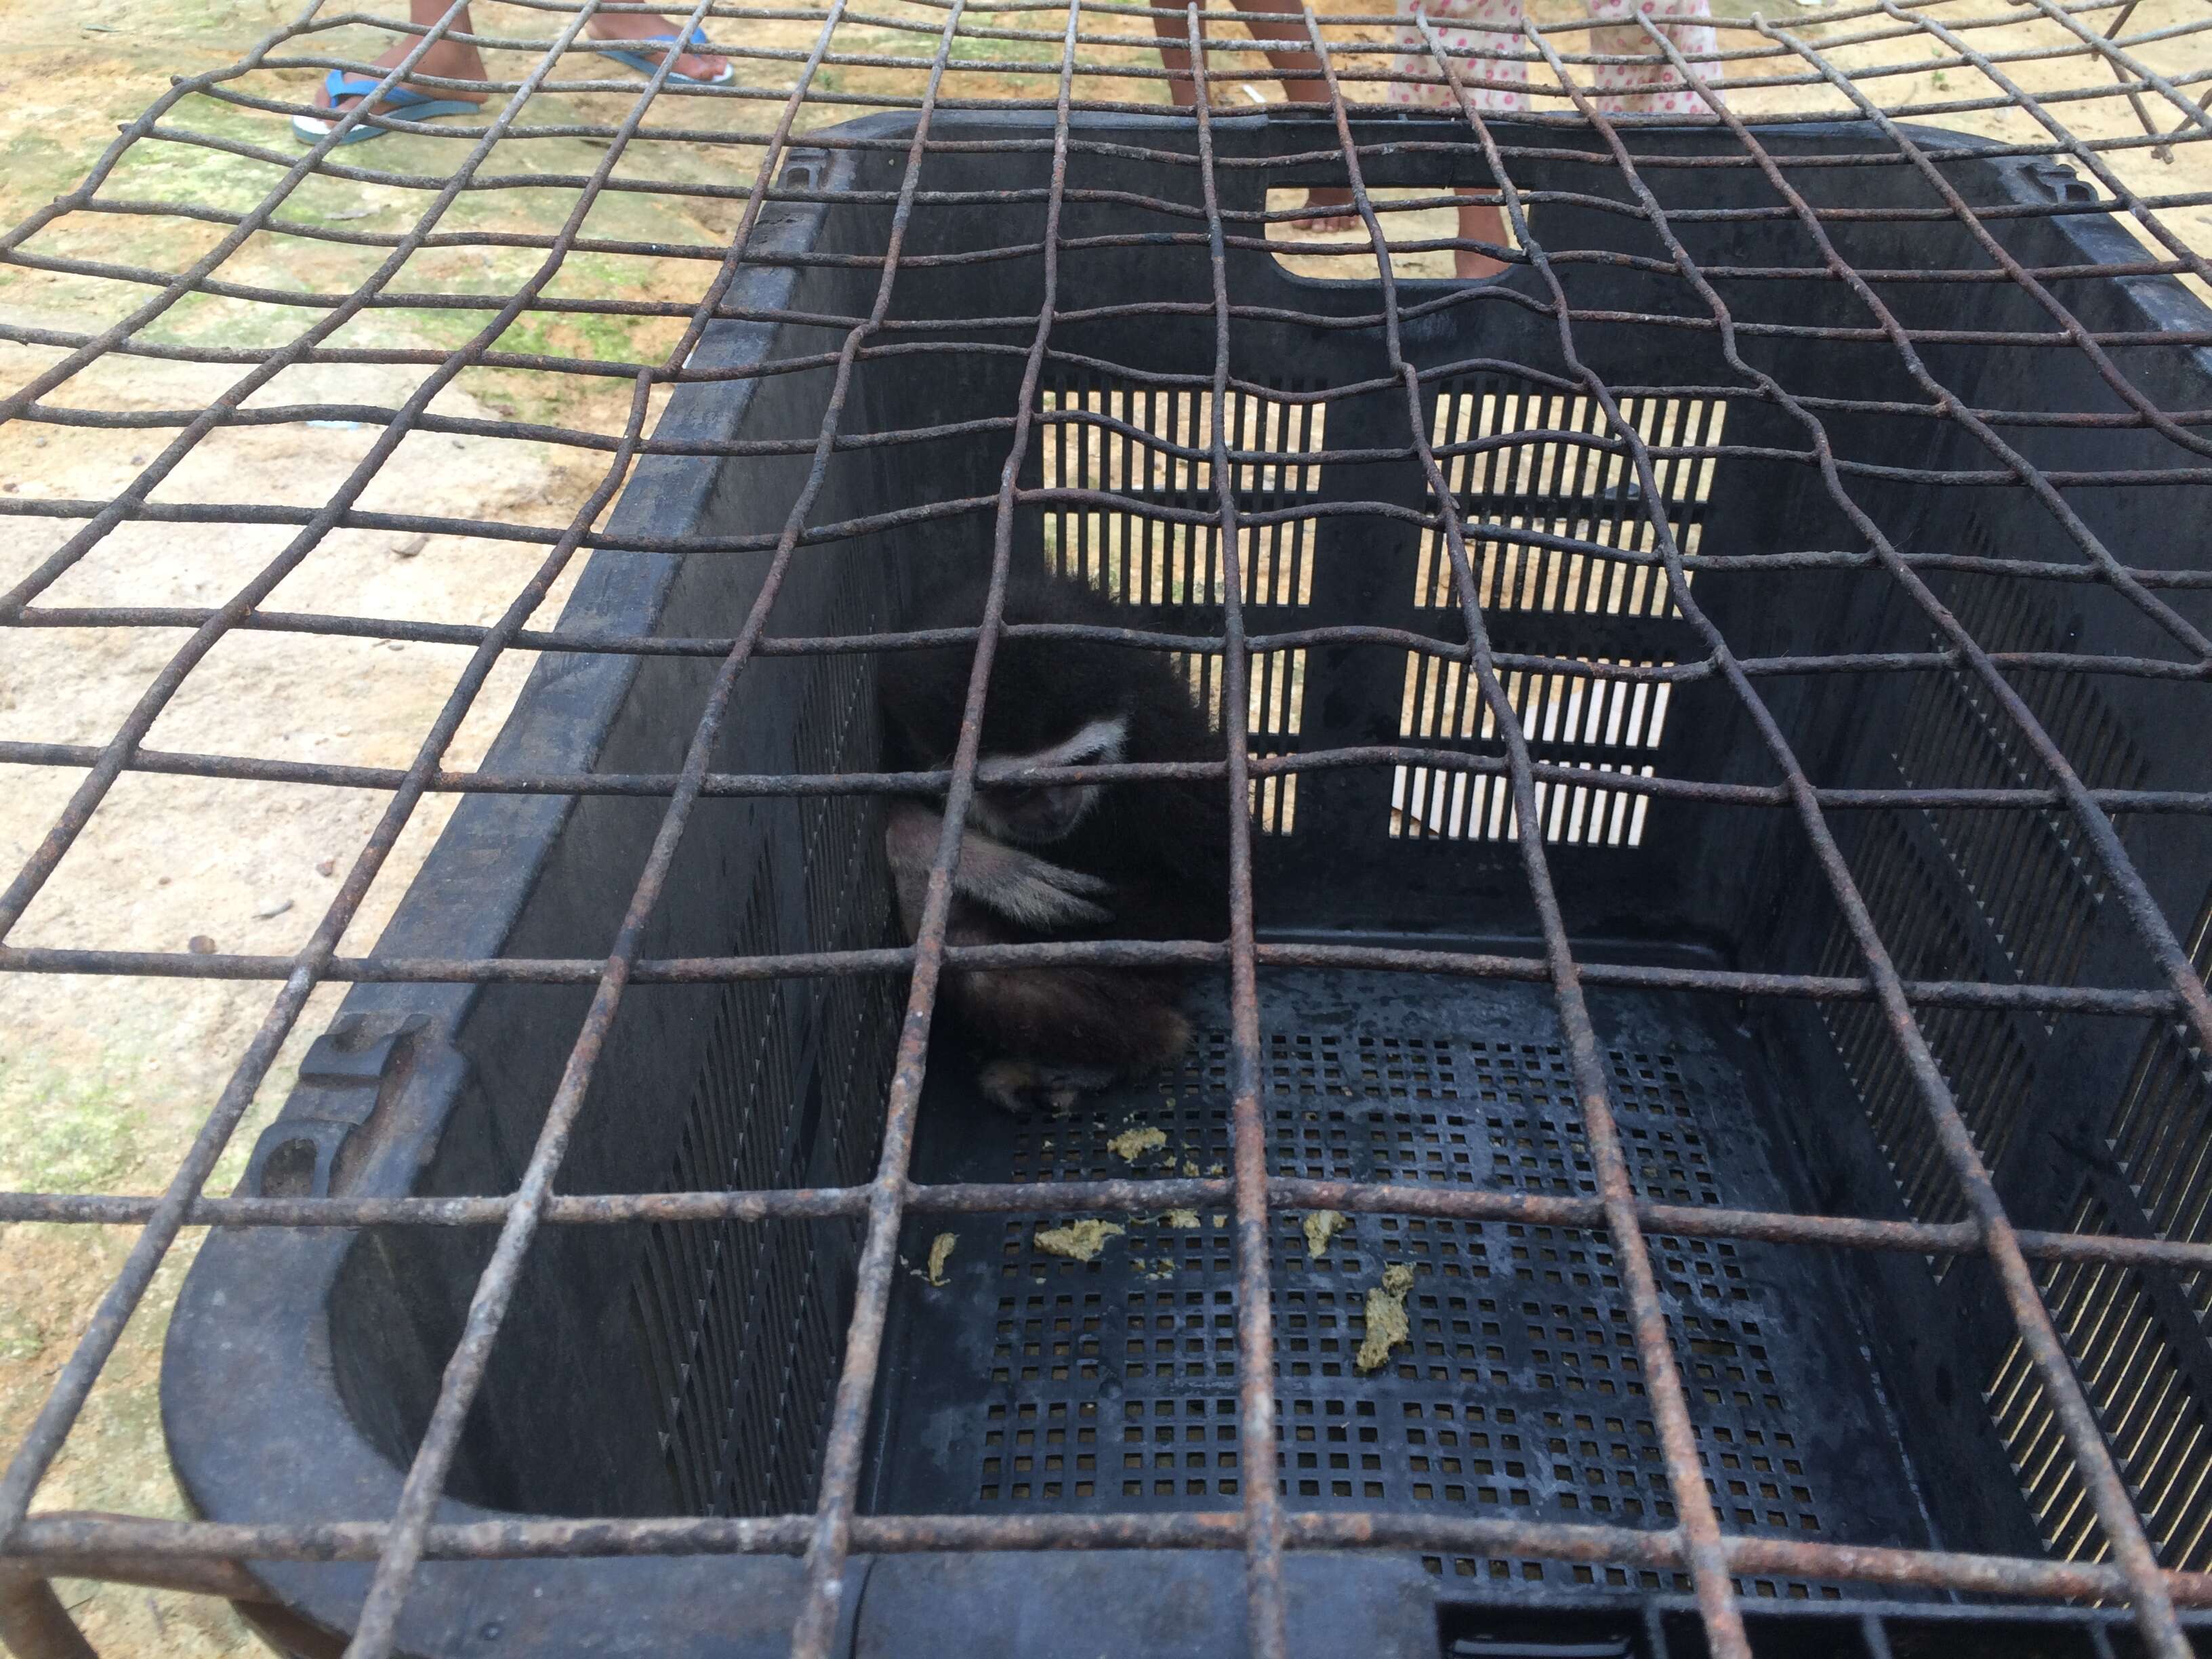 Wild gibbon trapped inside plastic fruit basket